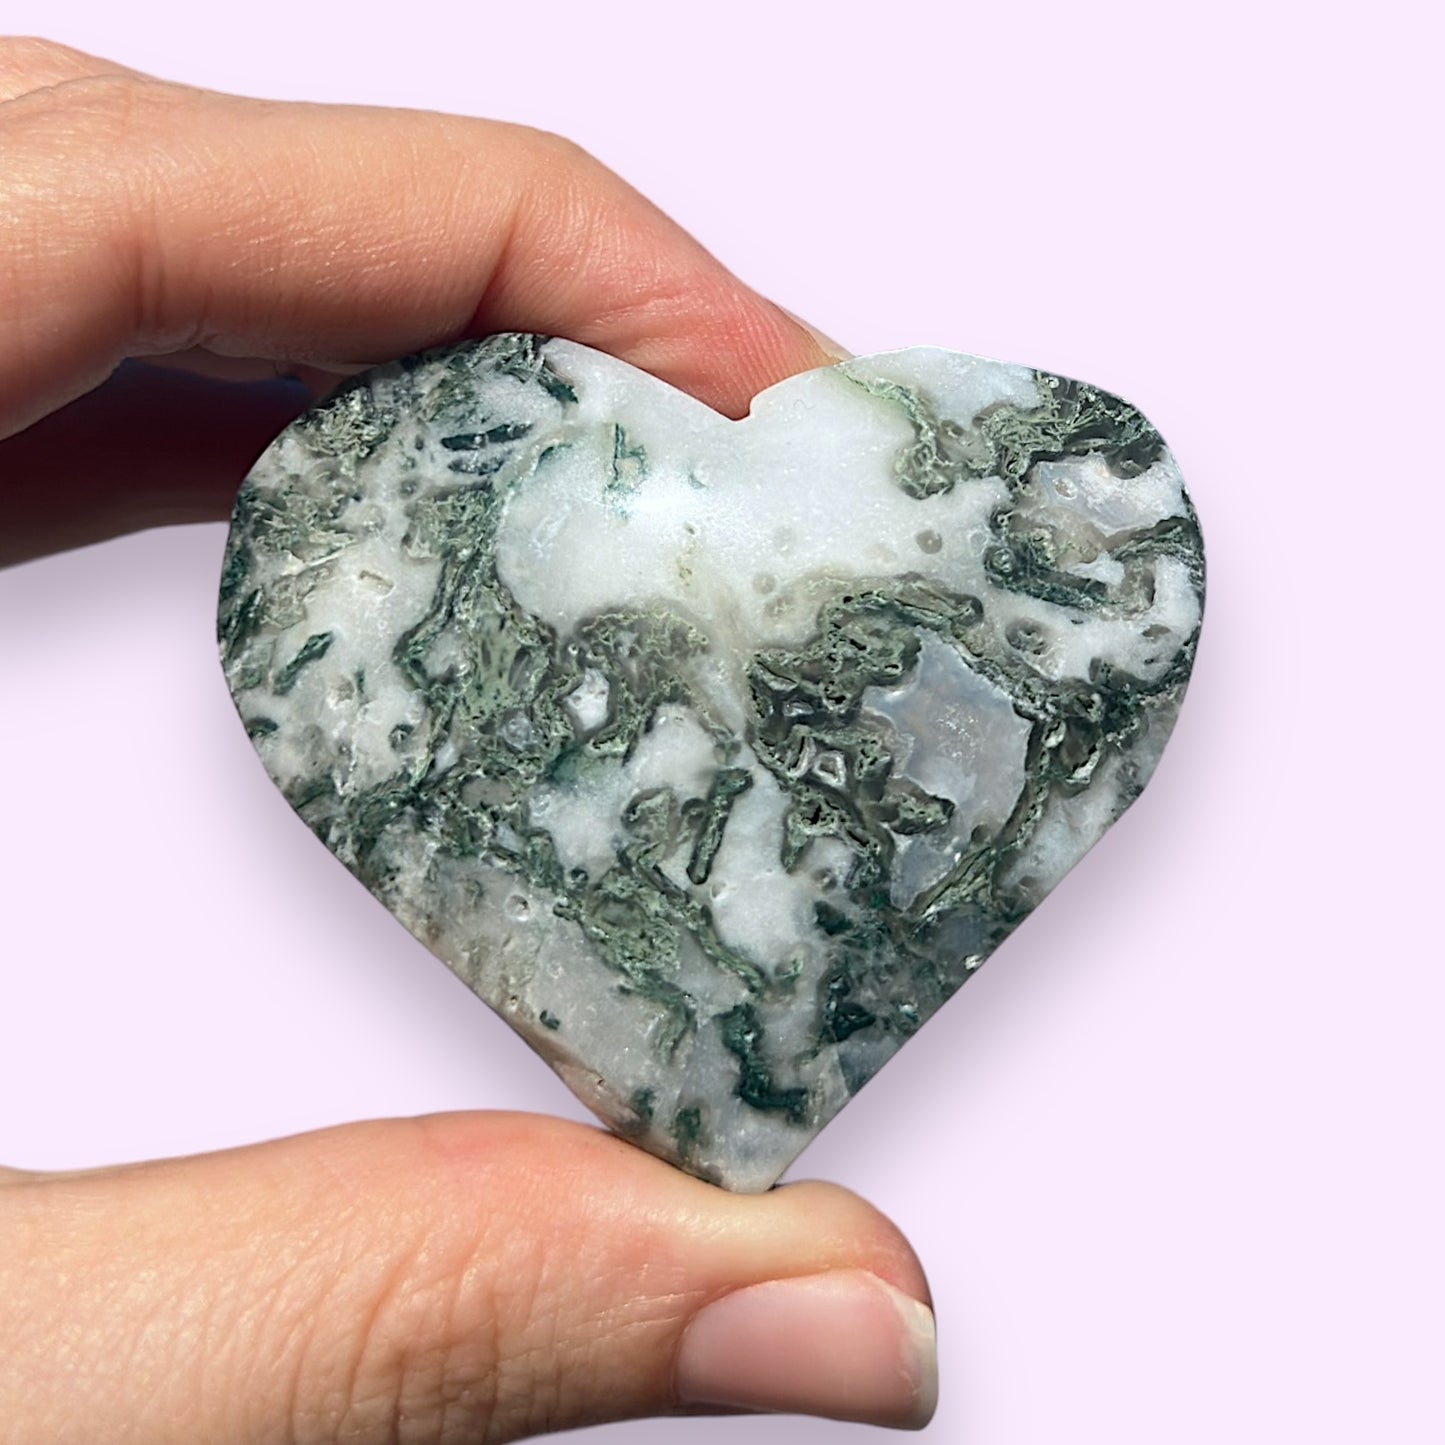 Moss Agate Crystal Heart - 1007K